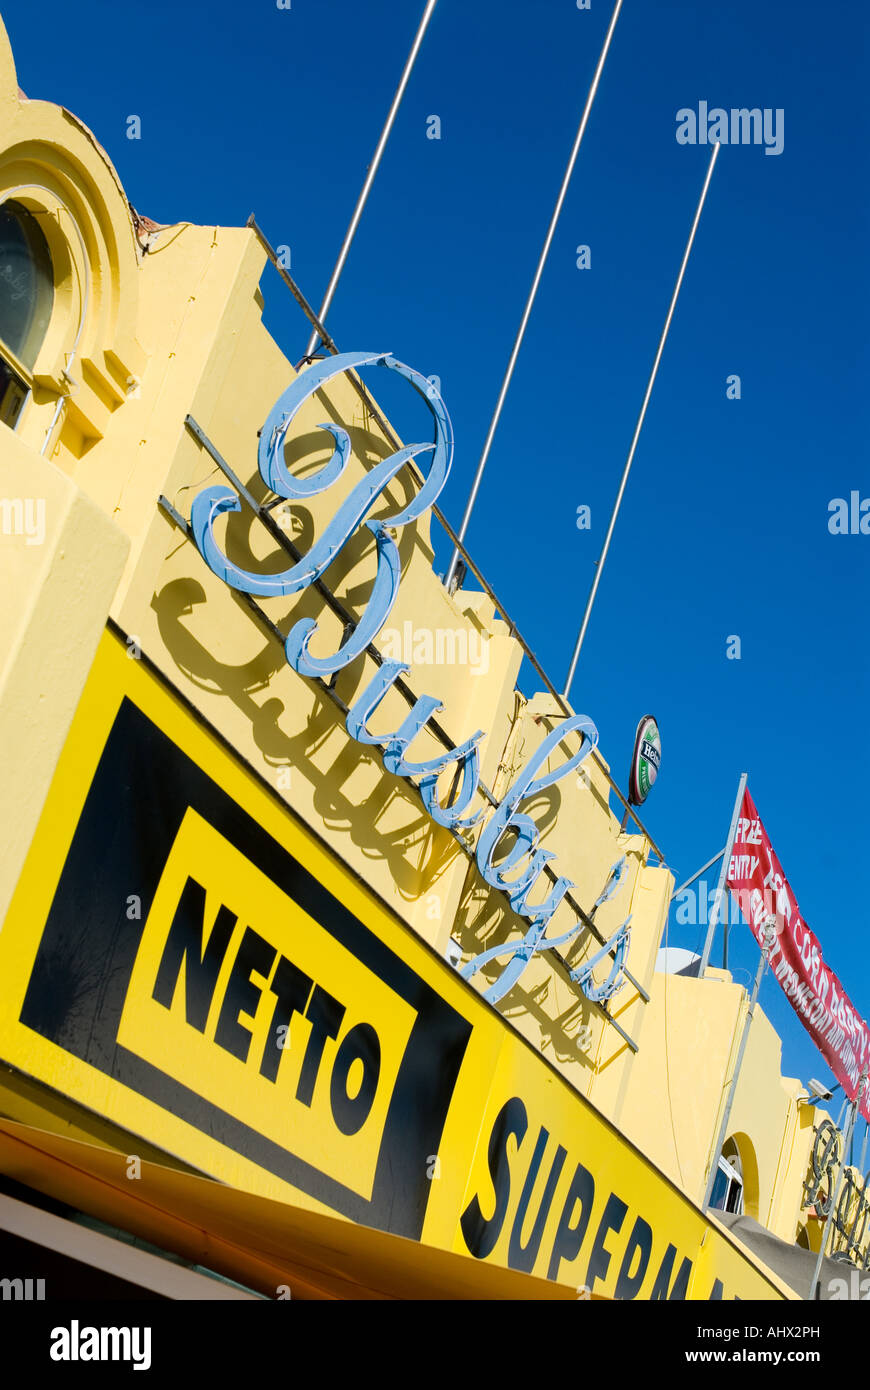 A Netto supermarket in Playa de les Americas Tenerife Canary Islands Spain  Stock Photo - Alamy